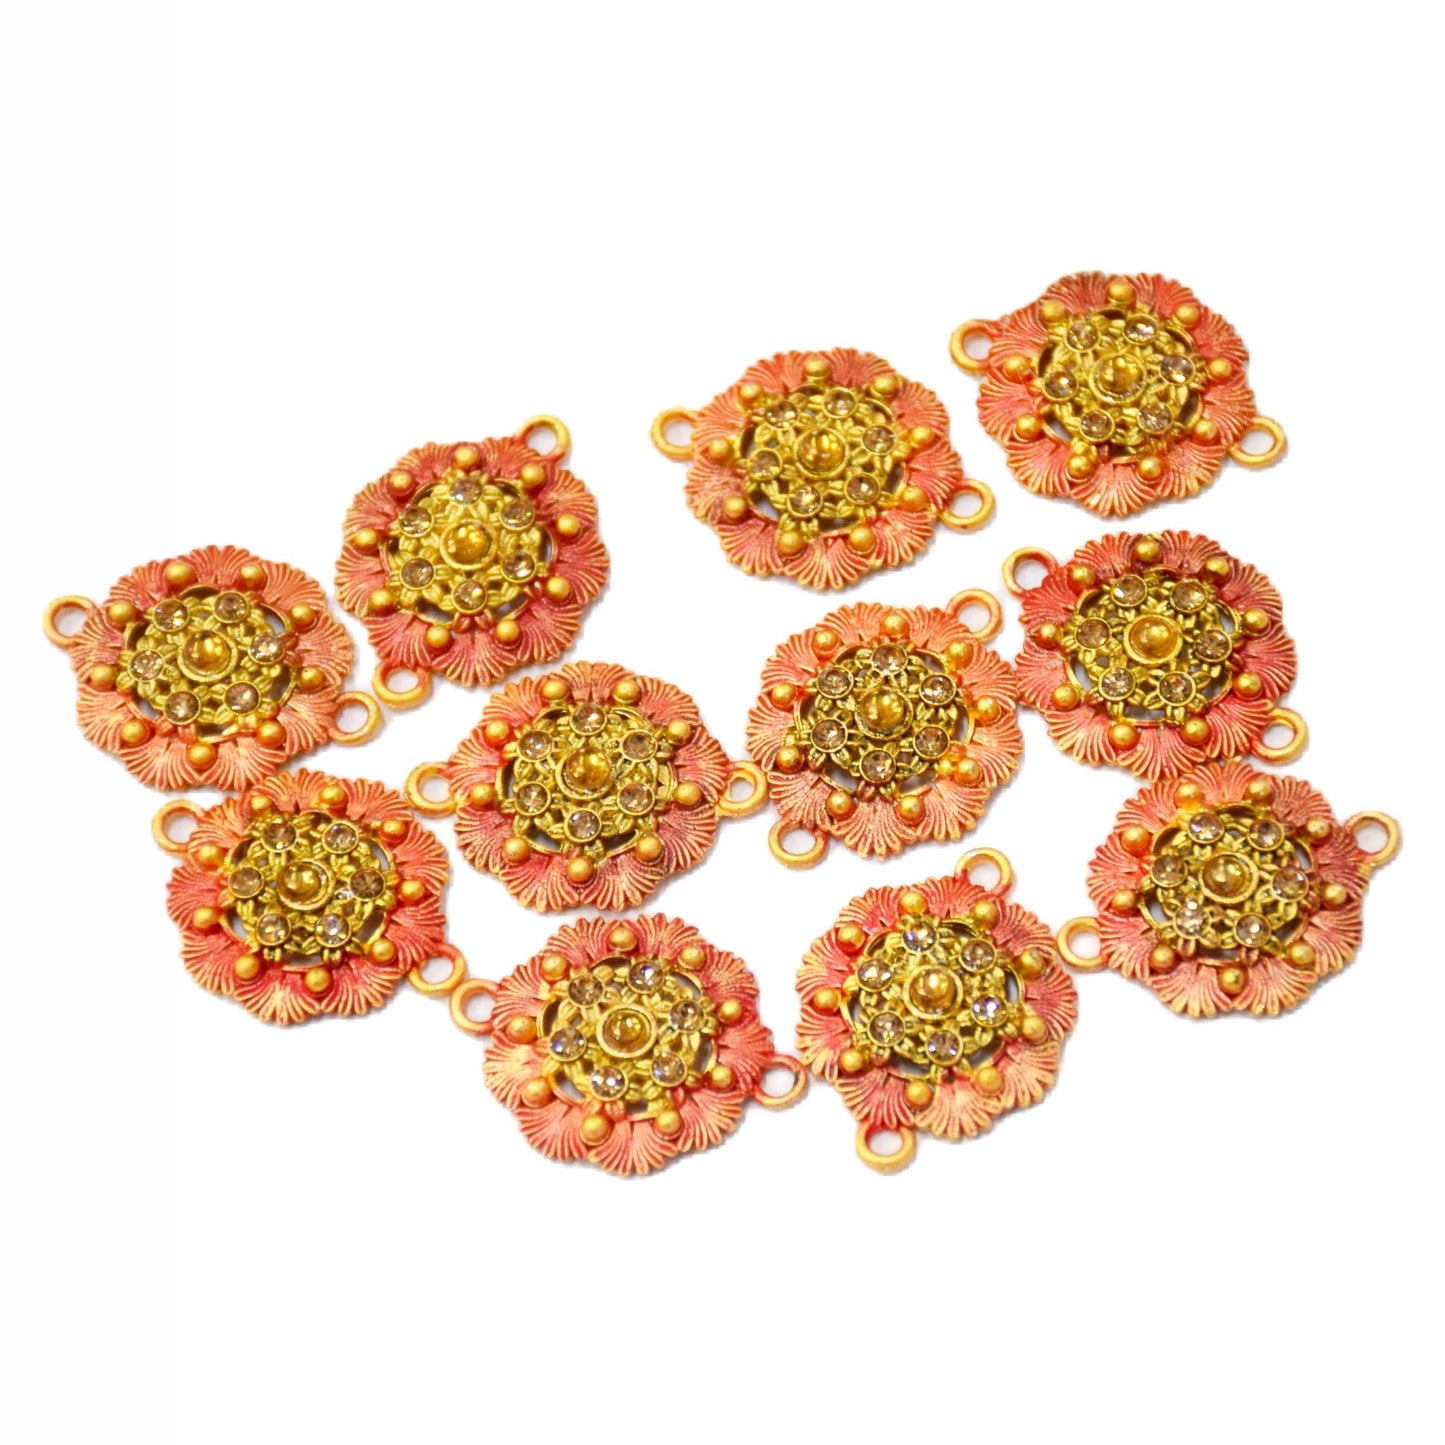 Indian Petals Enamel coated Metal Bouquet Motif for Craft Decoration or Rakhi -12506